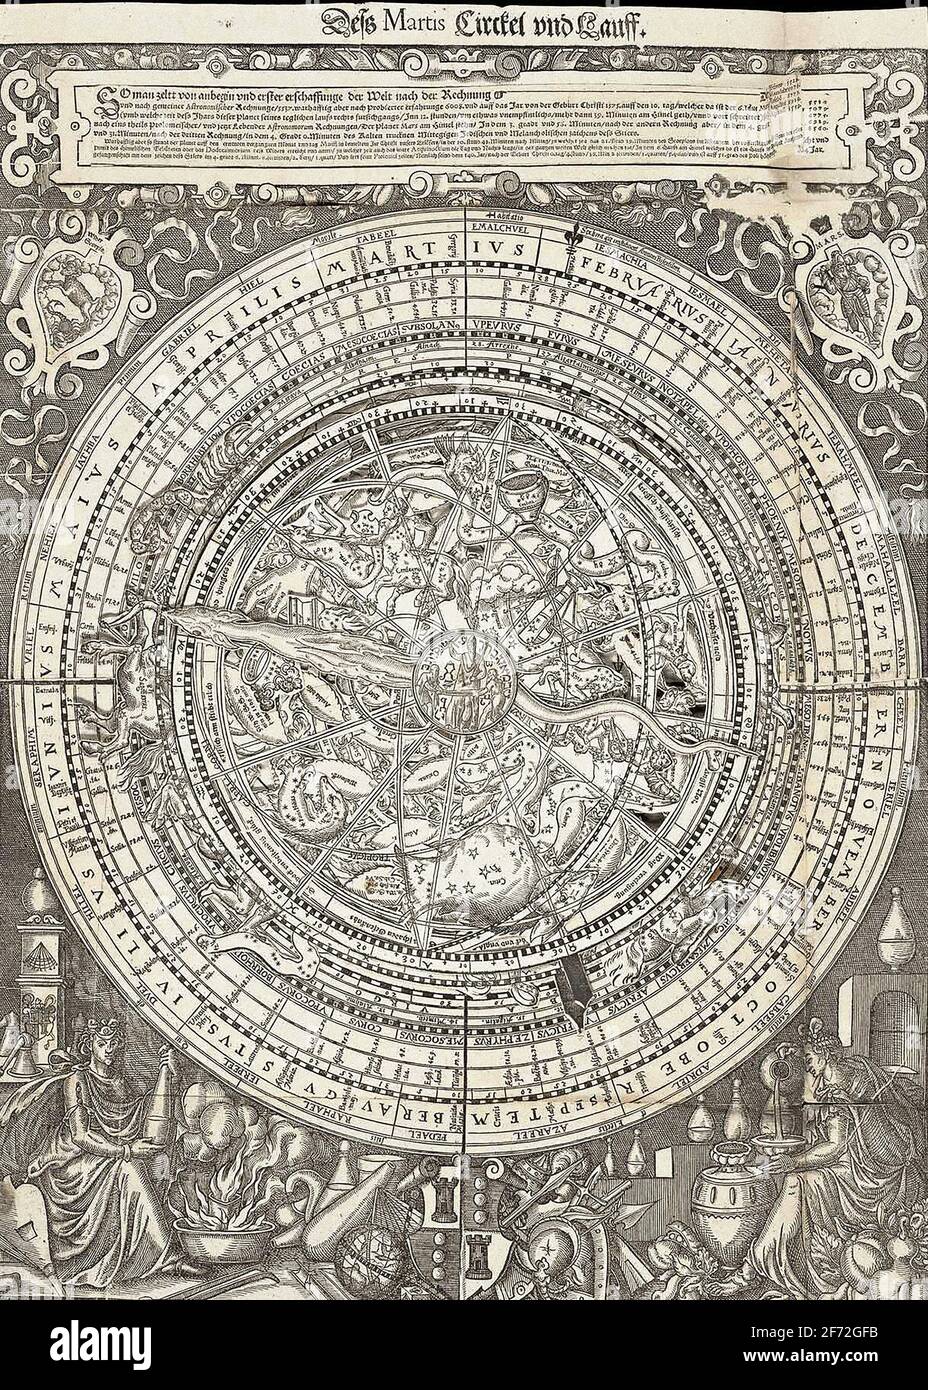 Calculando el Movimiento Celestial, 1574, Peter Hille. De Leonhard Thurneisser zum Thurn, der Planeten Circkel und Lauff Foto de stock